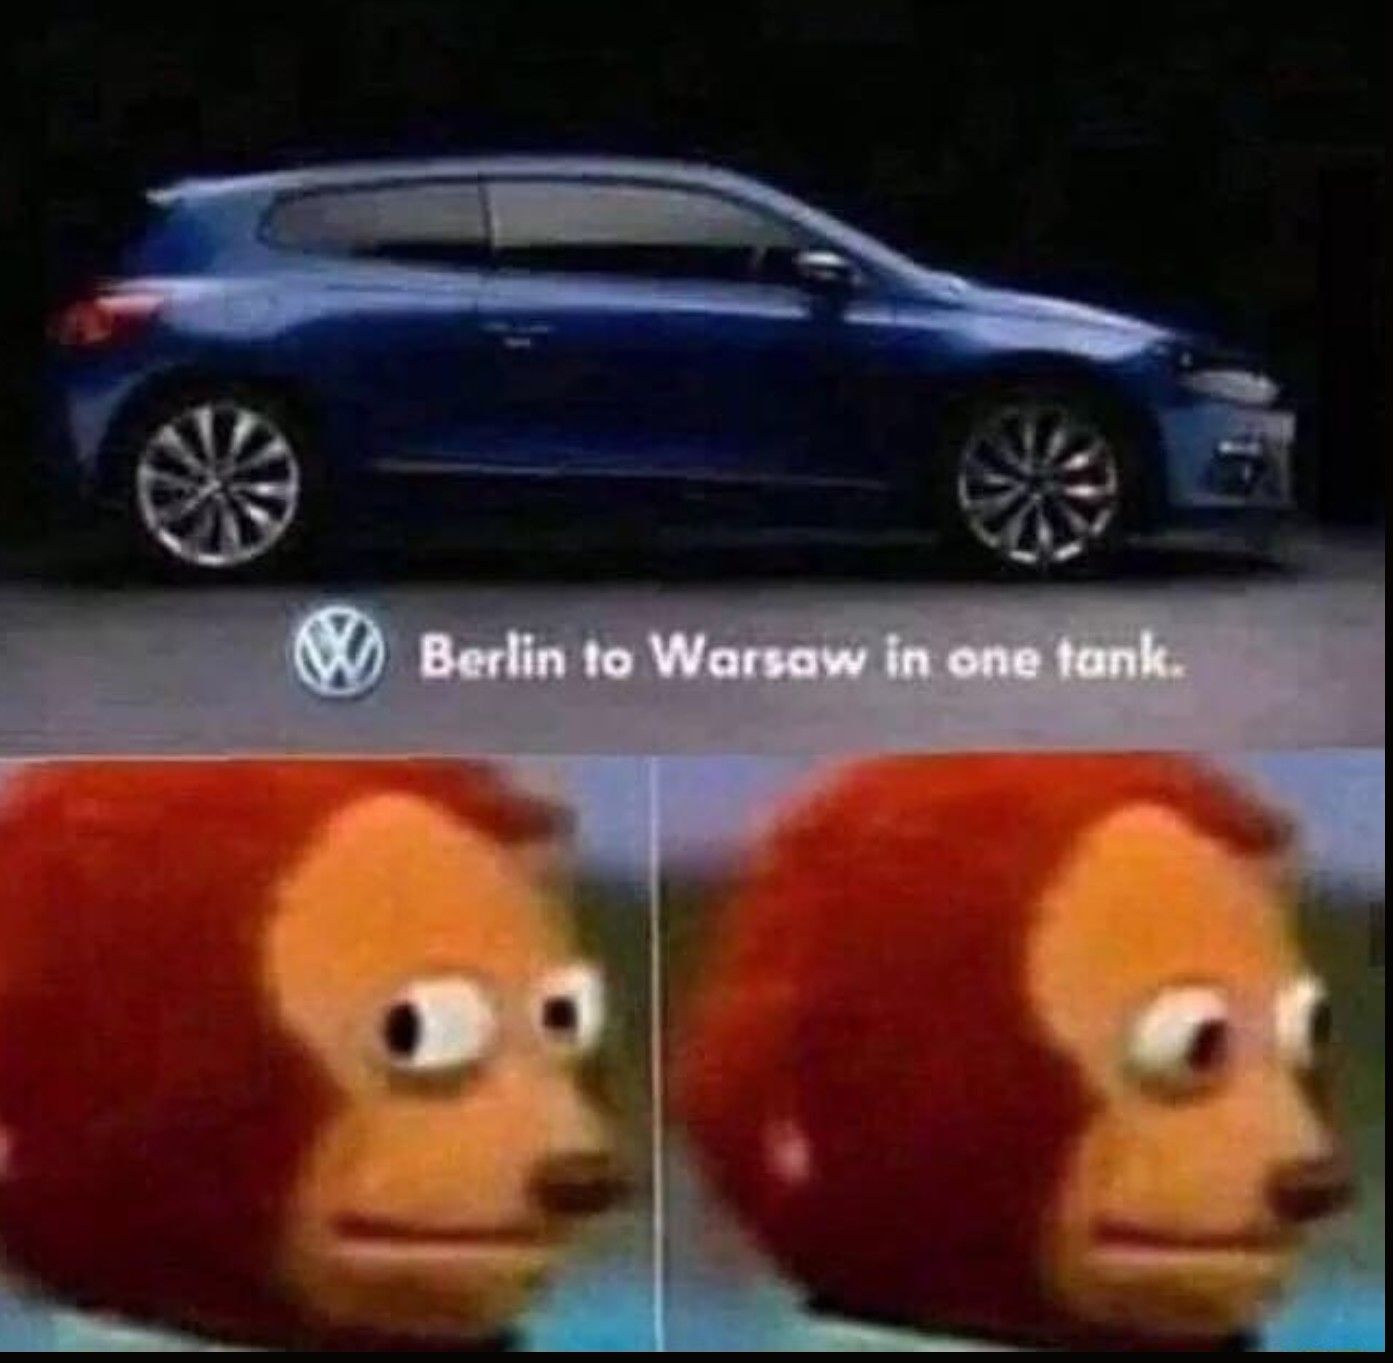 Volkswagen at it again...